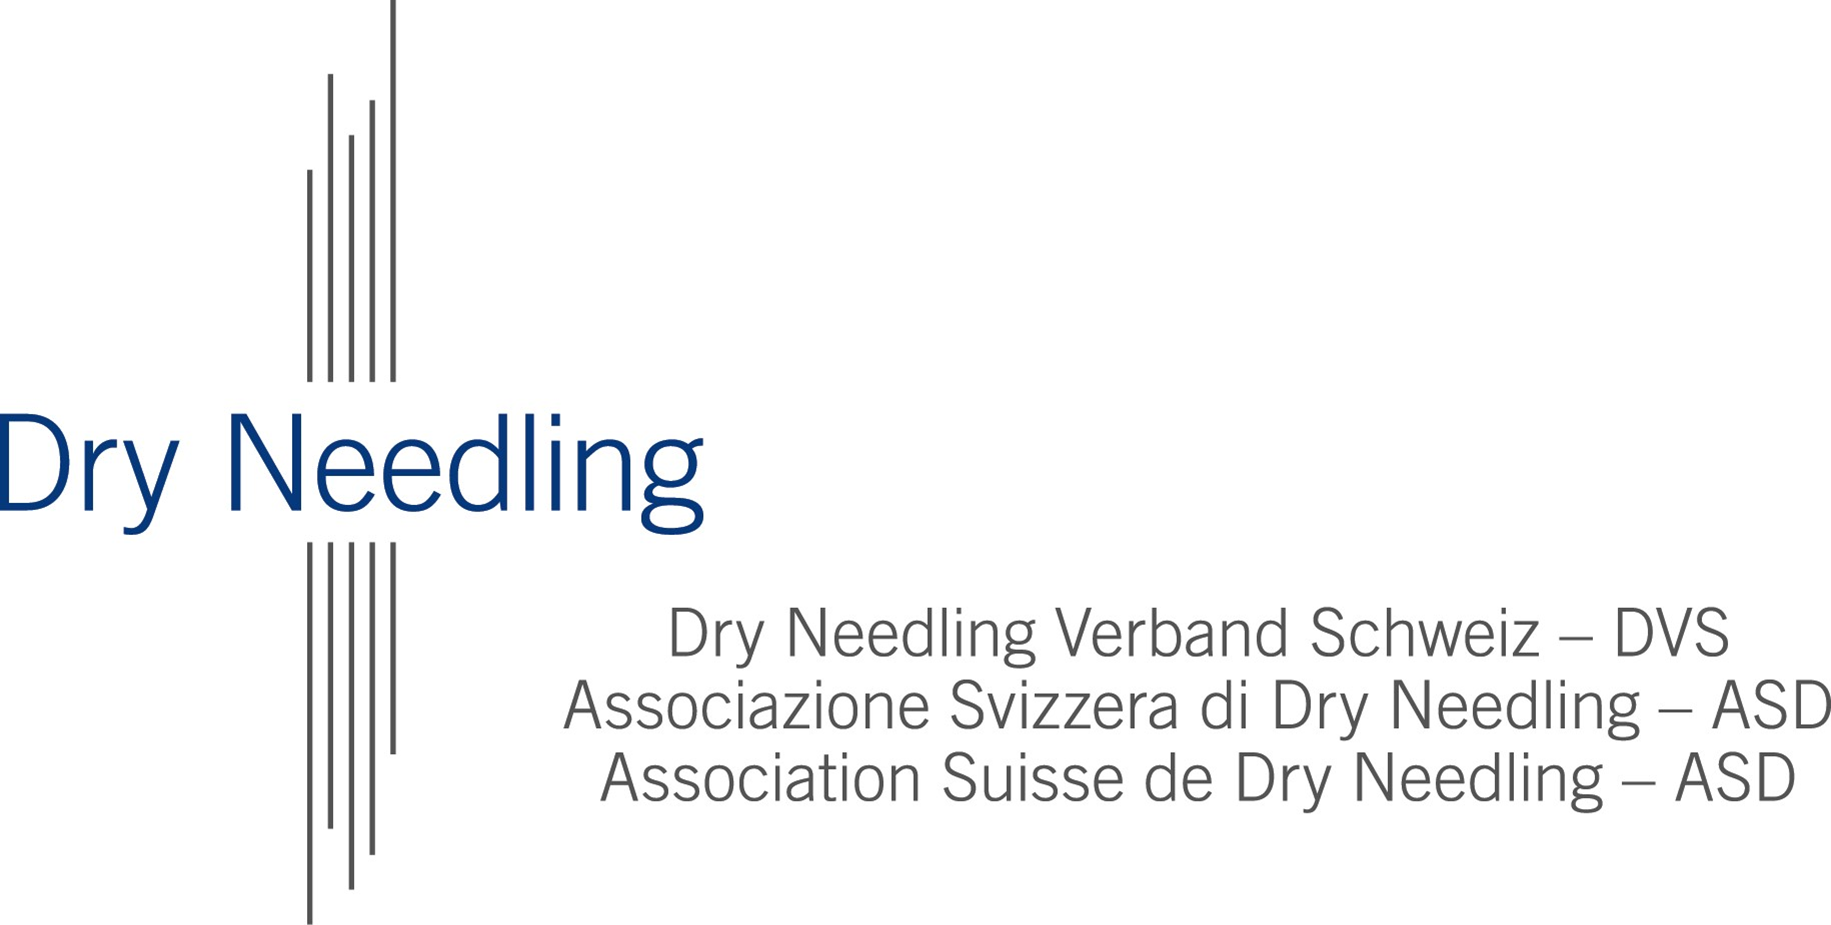 Dry Needling Verband Schweiz